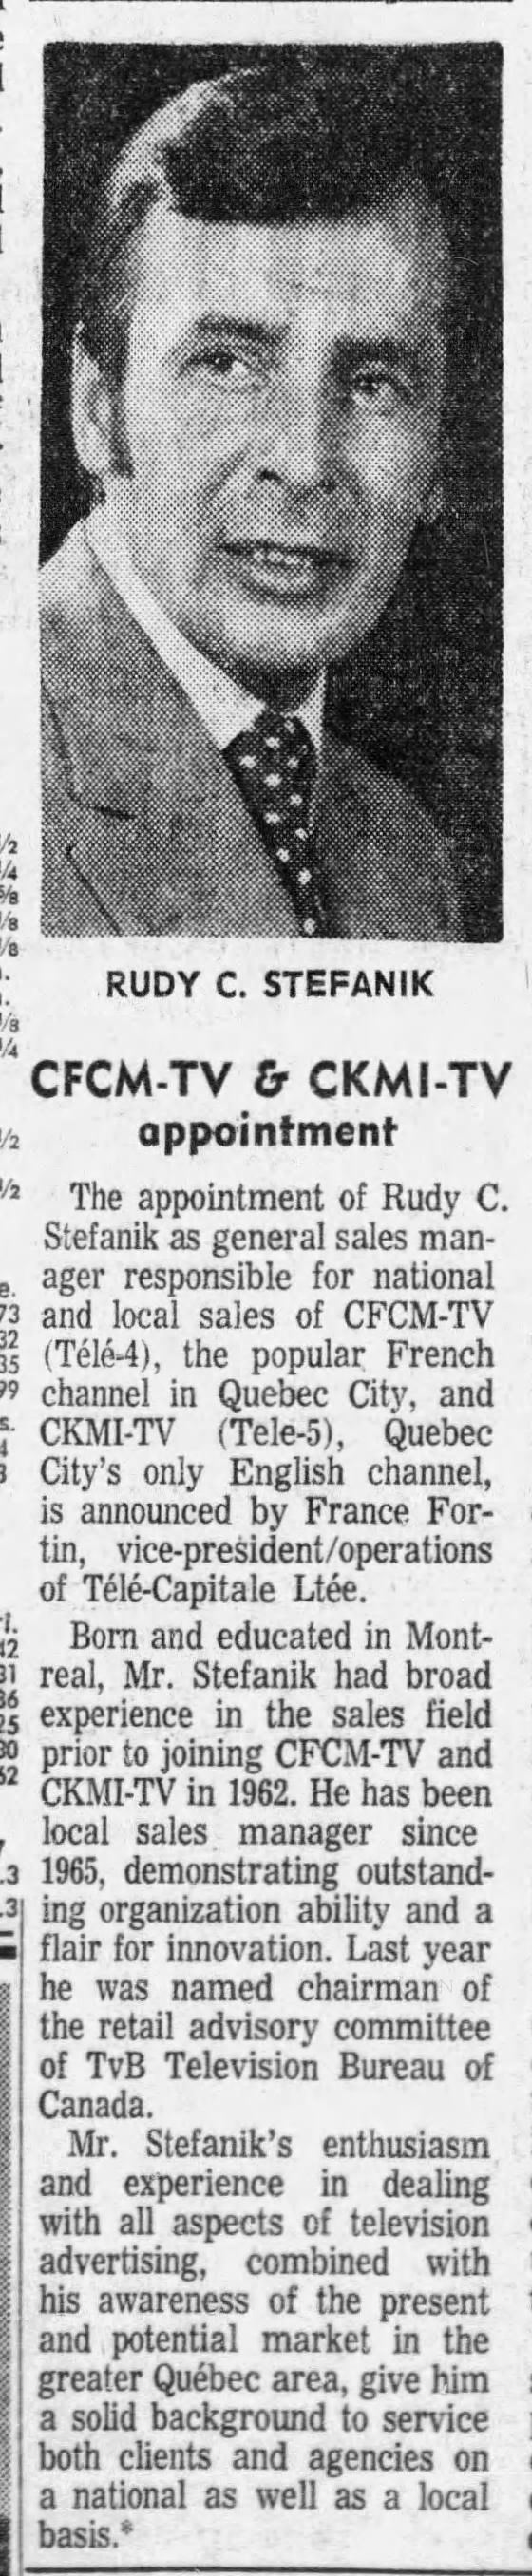 CFCM-TV & CKMI-TV appointment